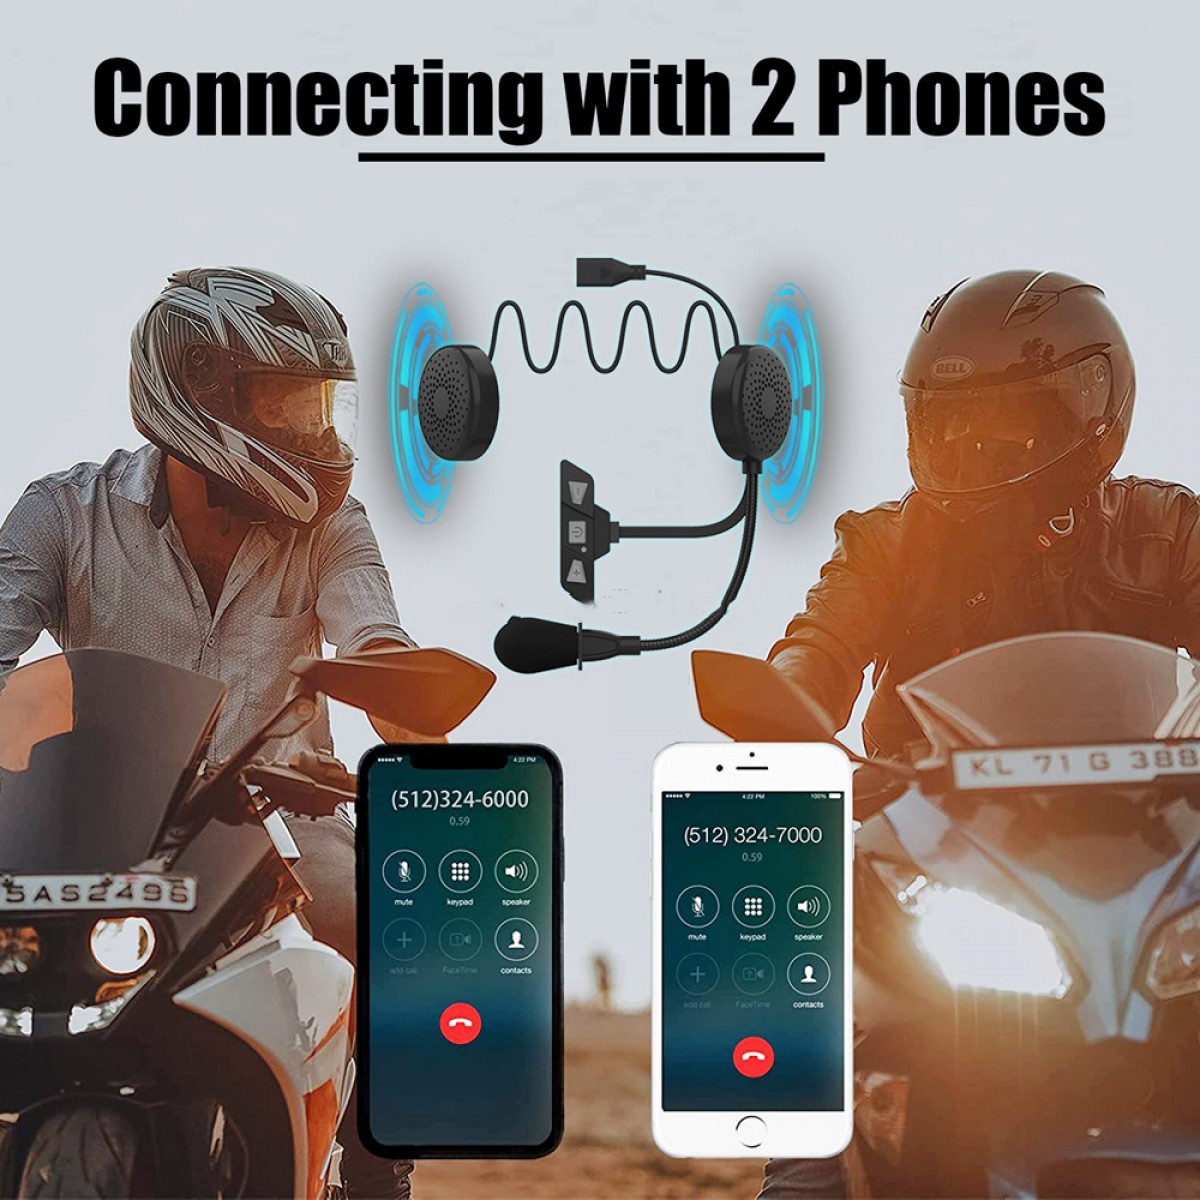 In-ear 5.2, Motorradhelm-Headset schwarz INF Bluetooth Kopfhörer